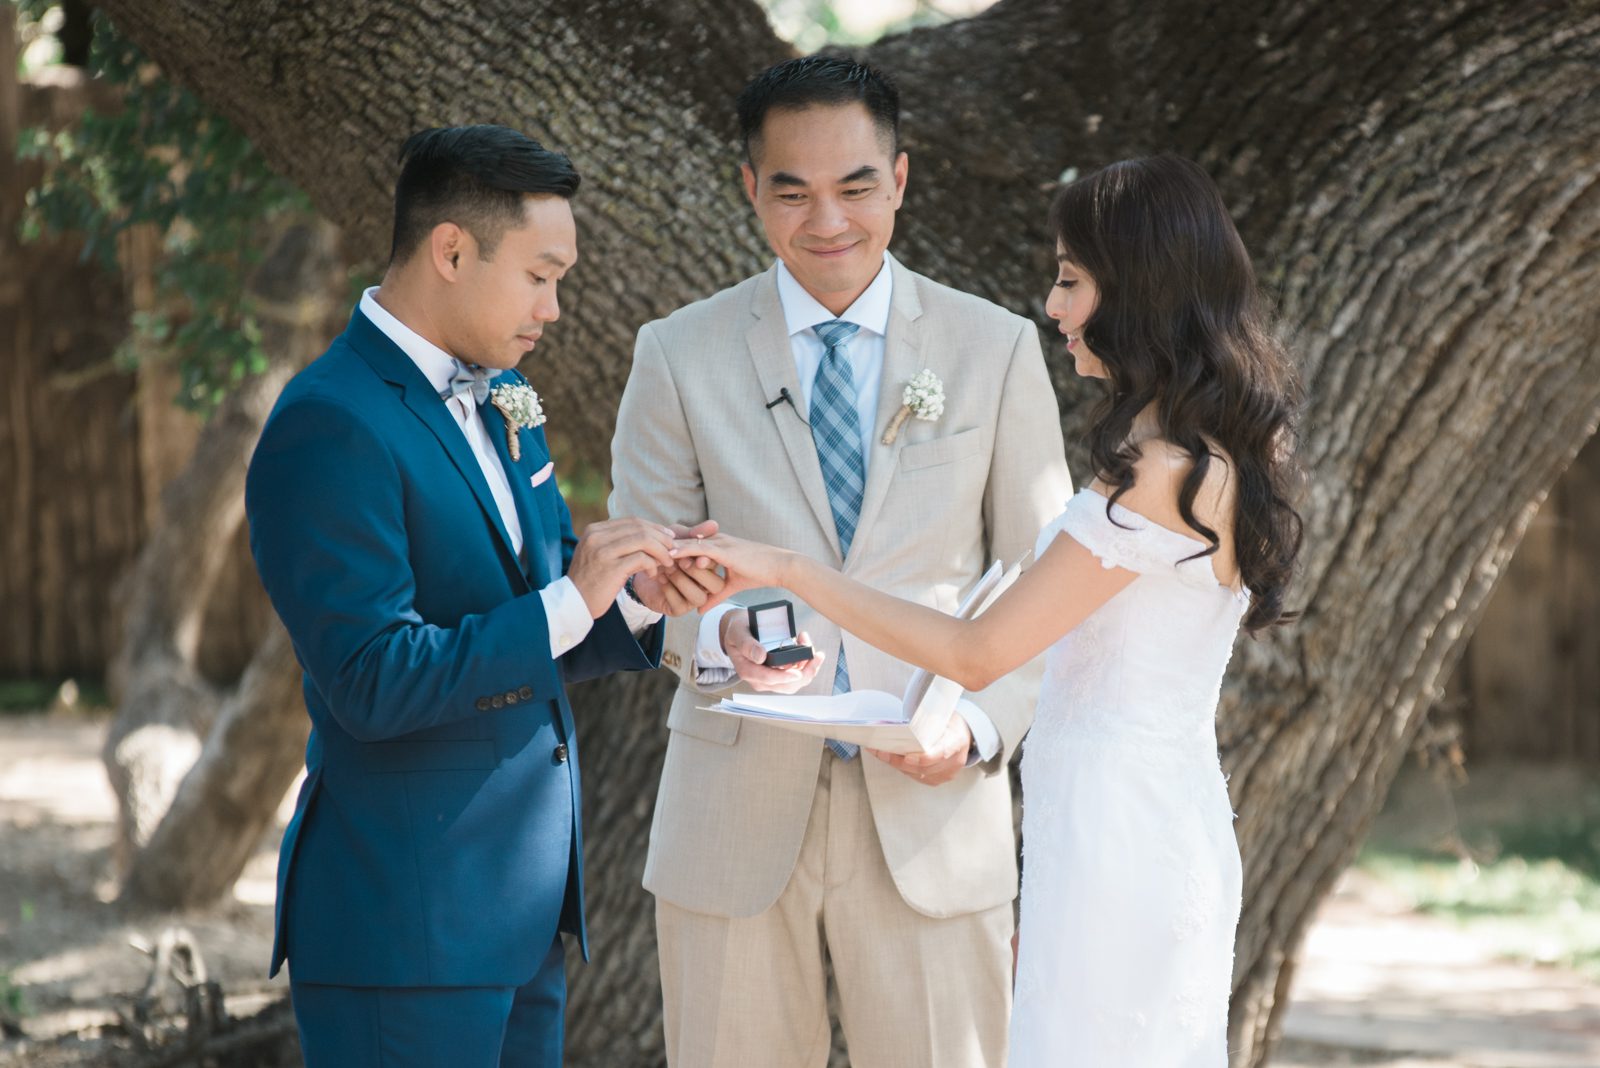 Groom placing ring on bride's finger at Hartley Farm Wedding by San Luis Obispo Wedding photographer Yvonne Goll Photography